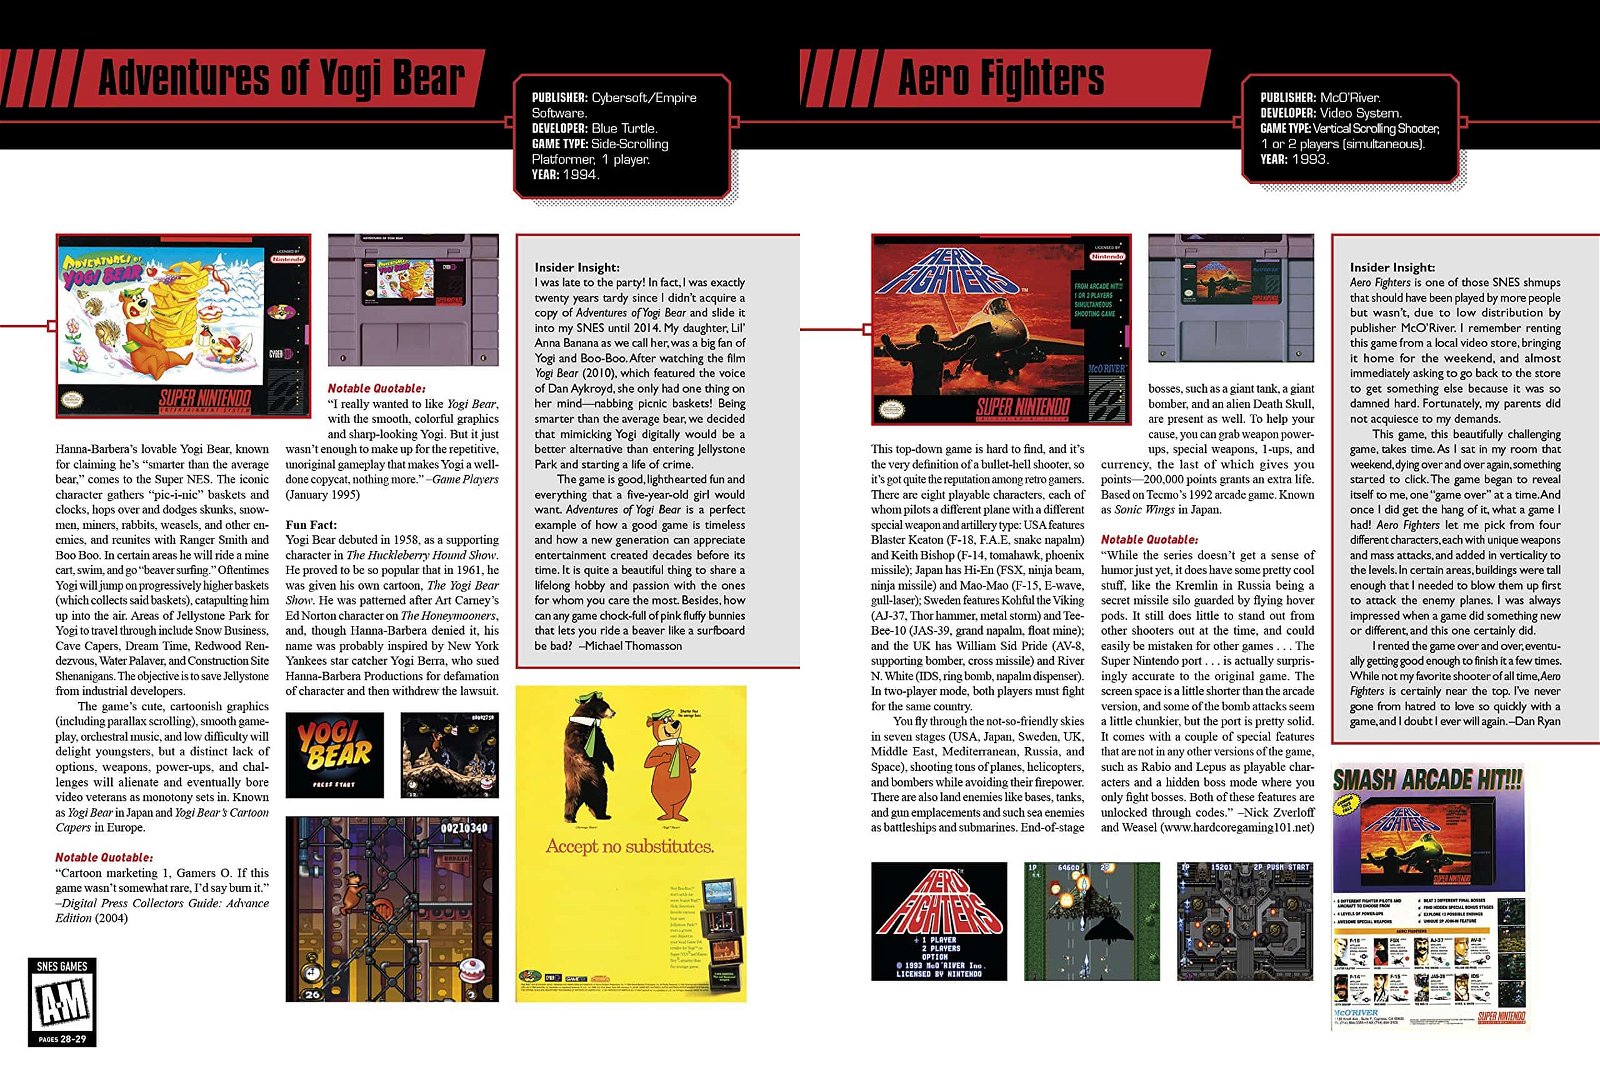 The SNES Omninbus: The Super Nintendo and Its Games, Vol 1 (A-M